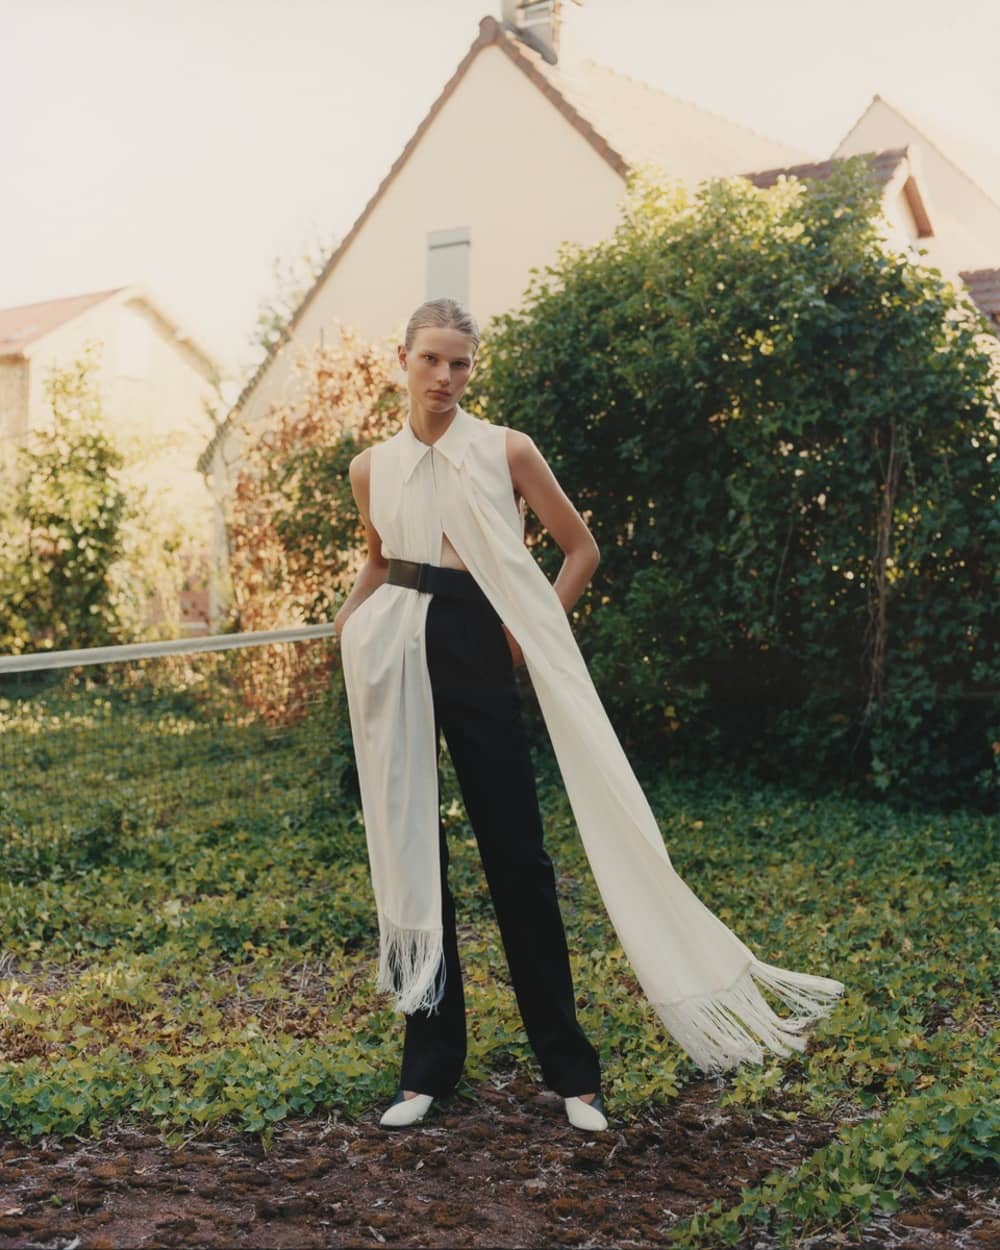 Adela Stenberg in Givenchy by Benjamin Vnuk for Muse Magazine